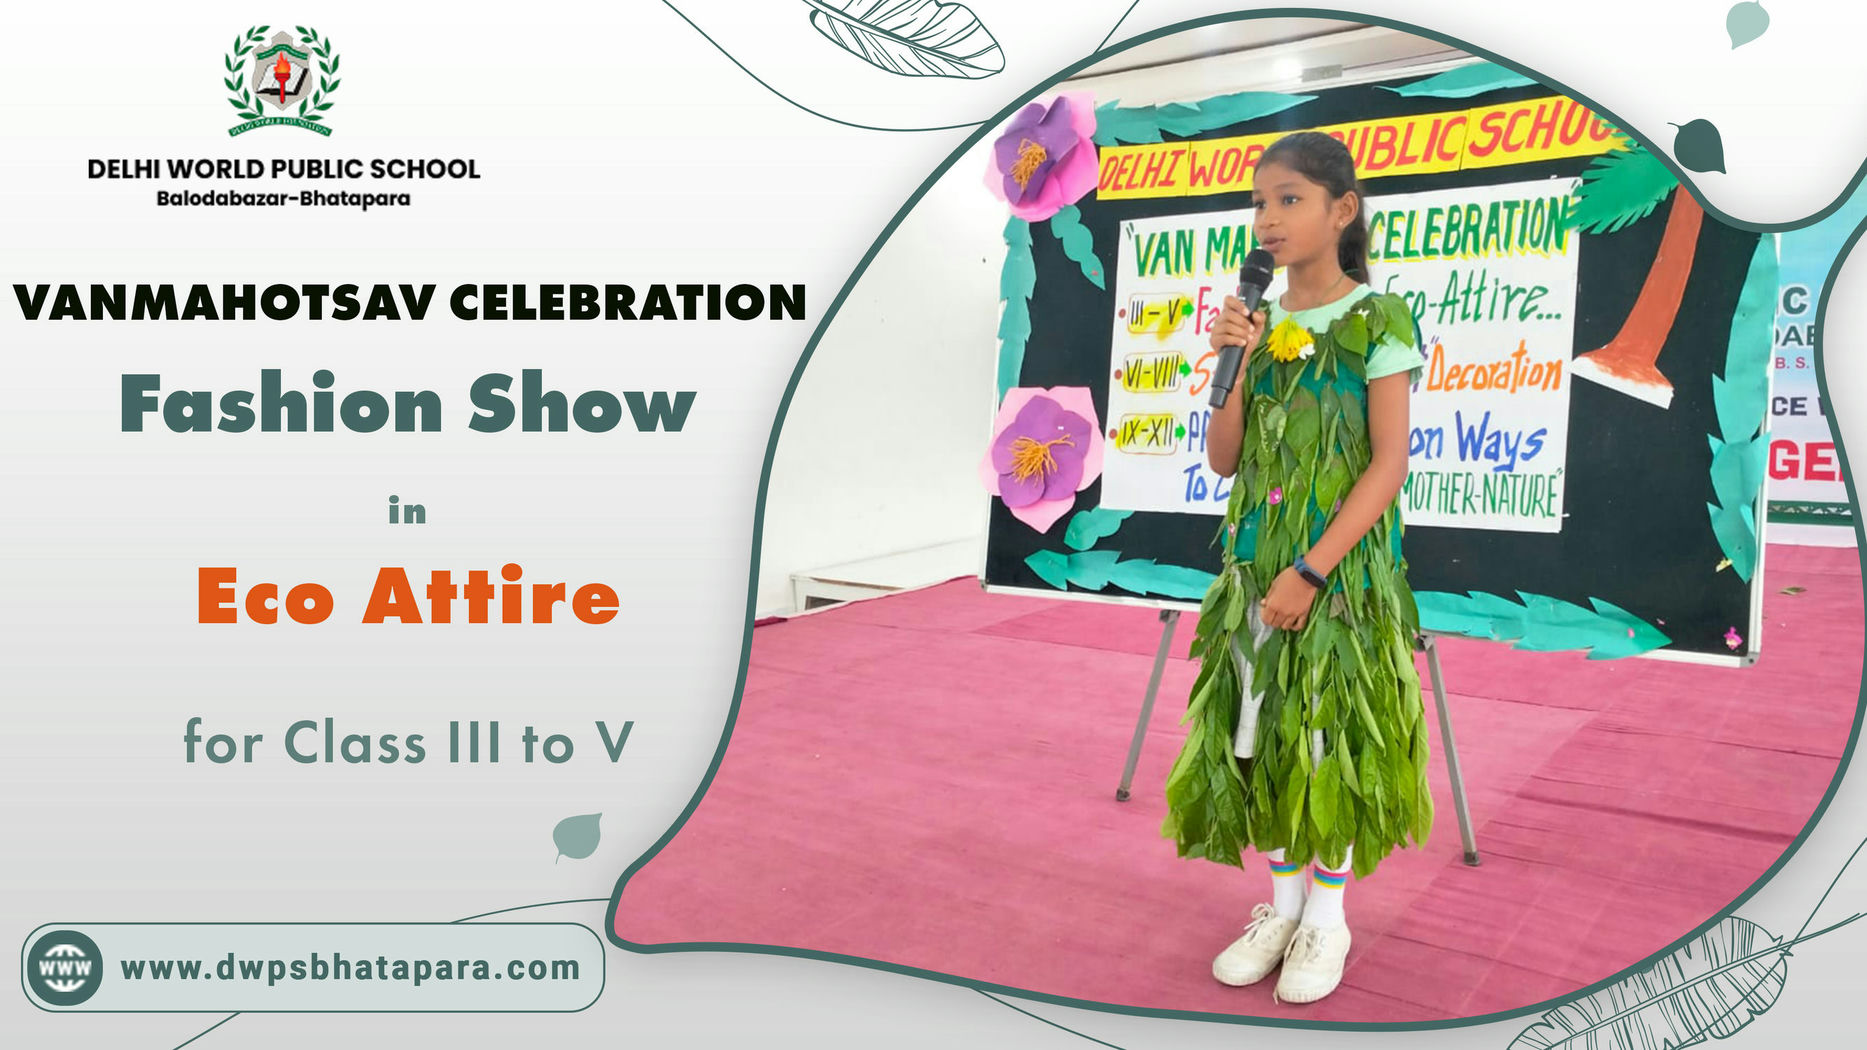 DWPS Bhatapara - Vanmahotsav Celebration Fashion Show